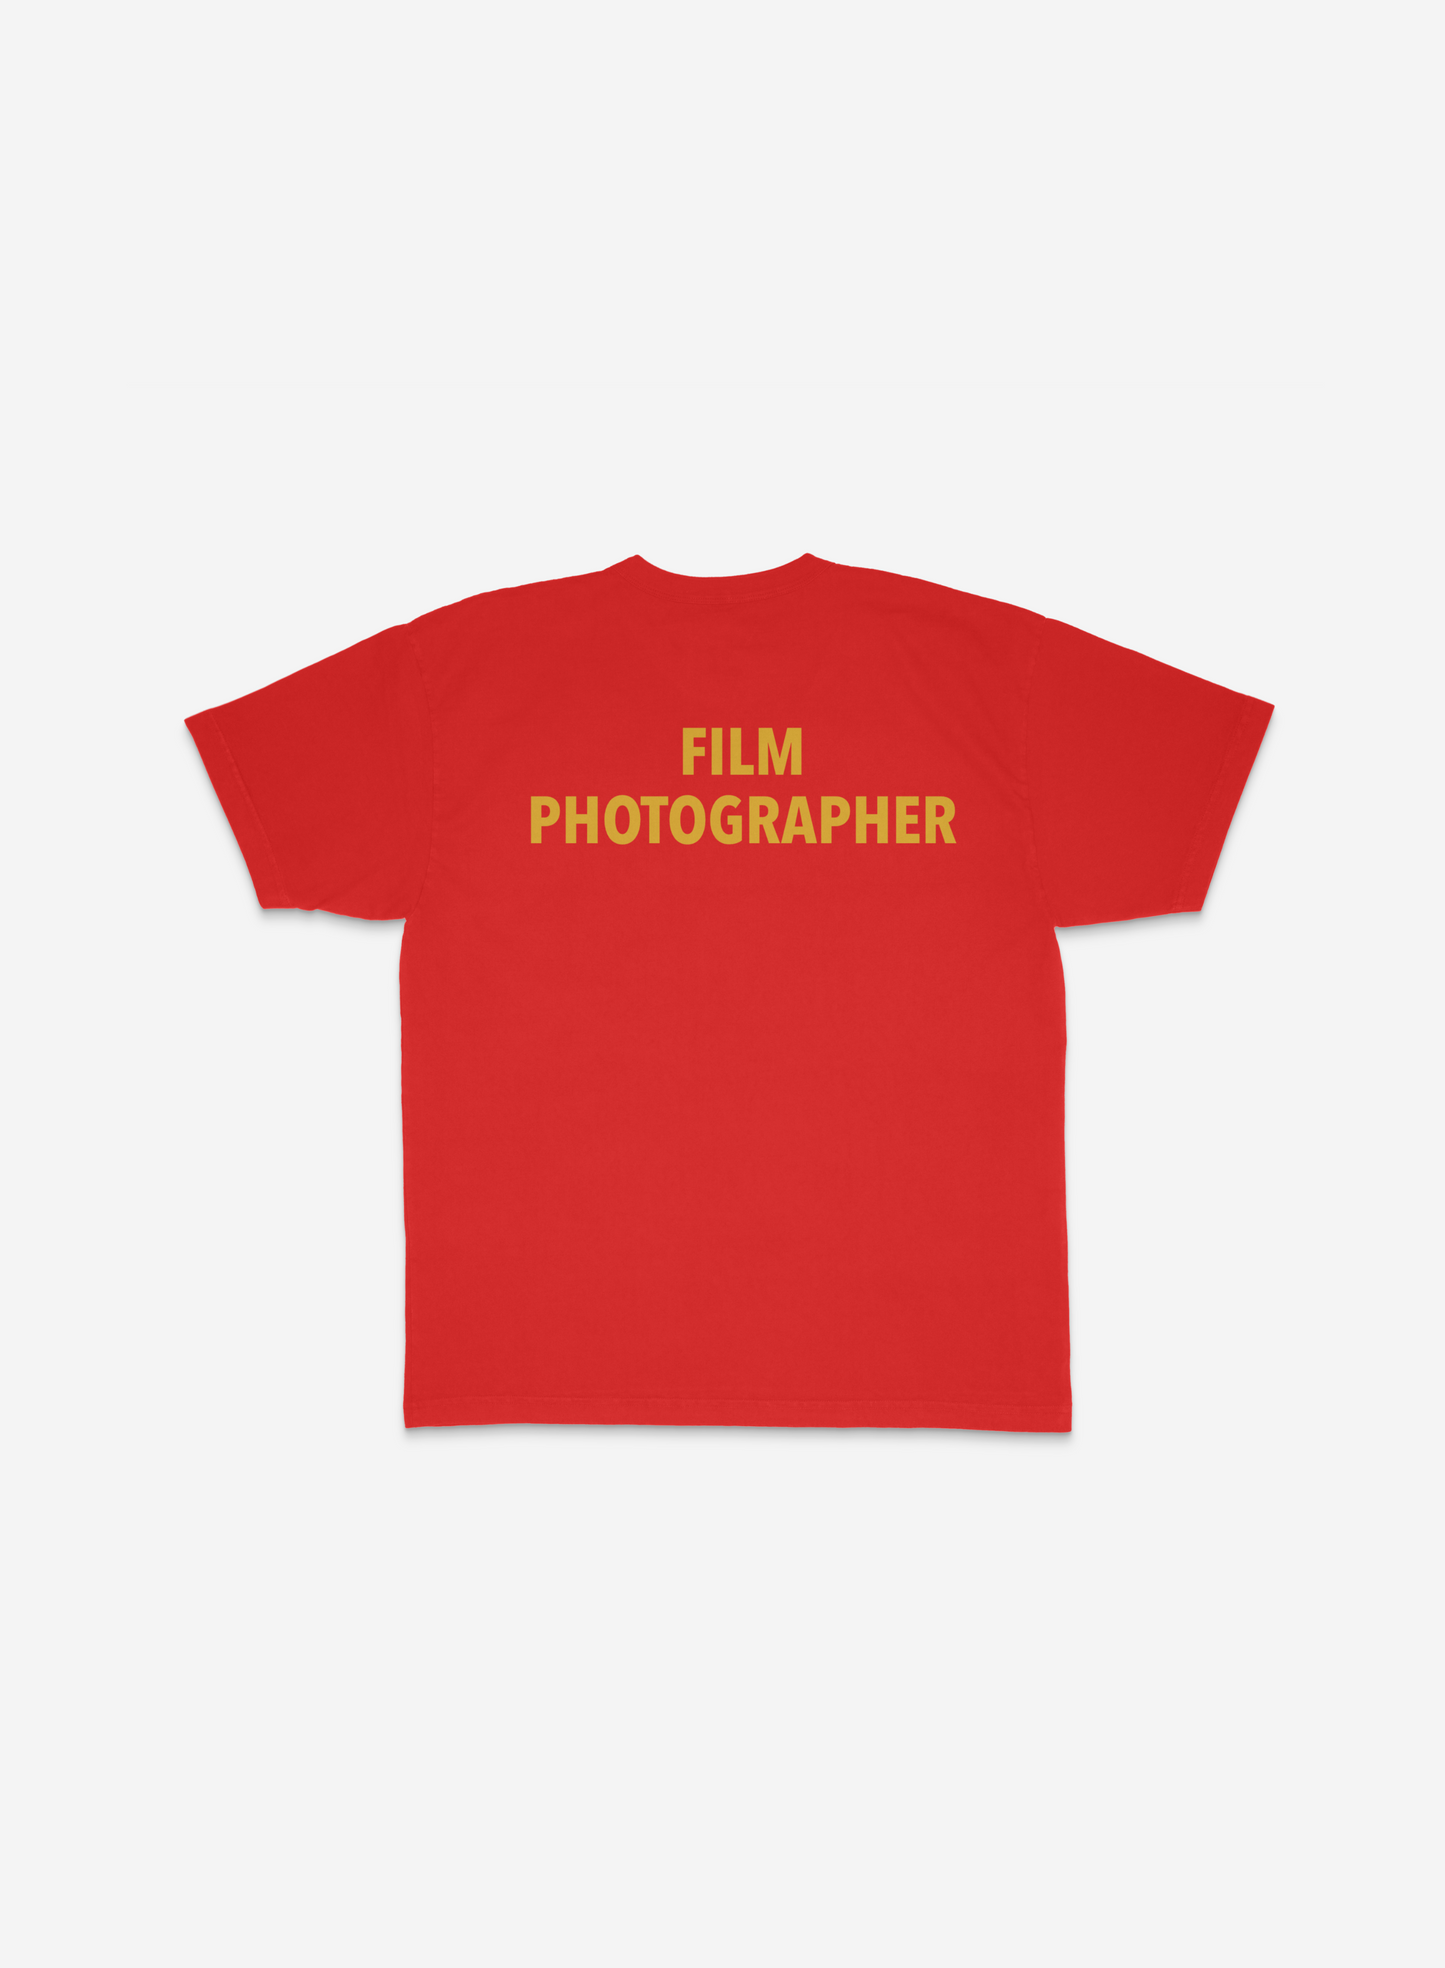 FILM PHOTOGRAPHER T-SHIRT (RED/YELLOW)